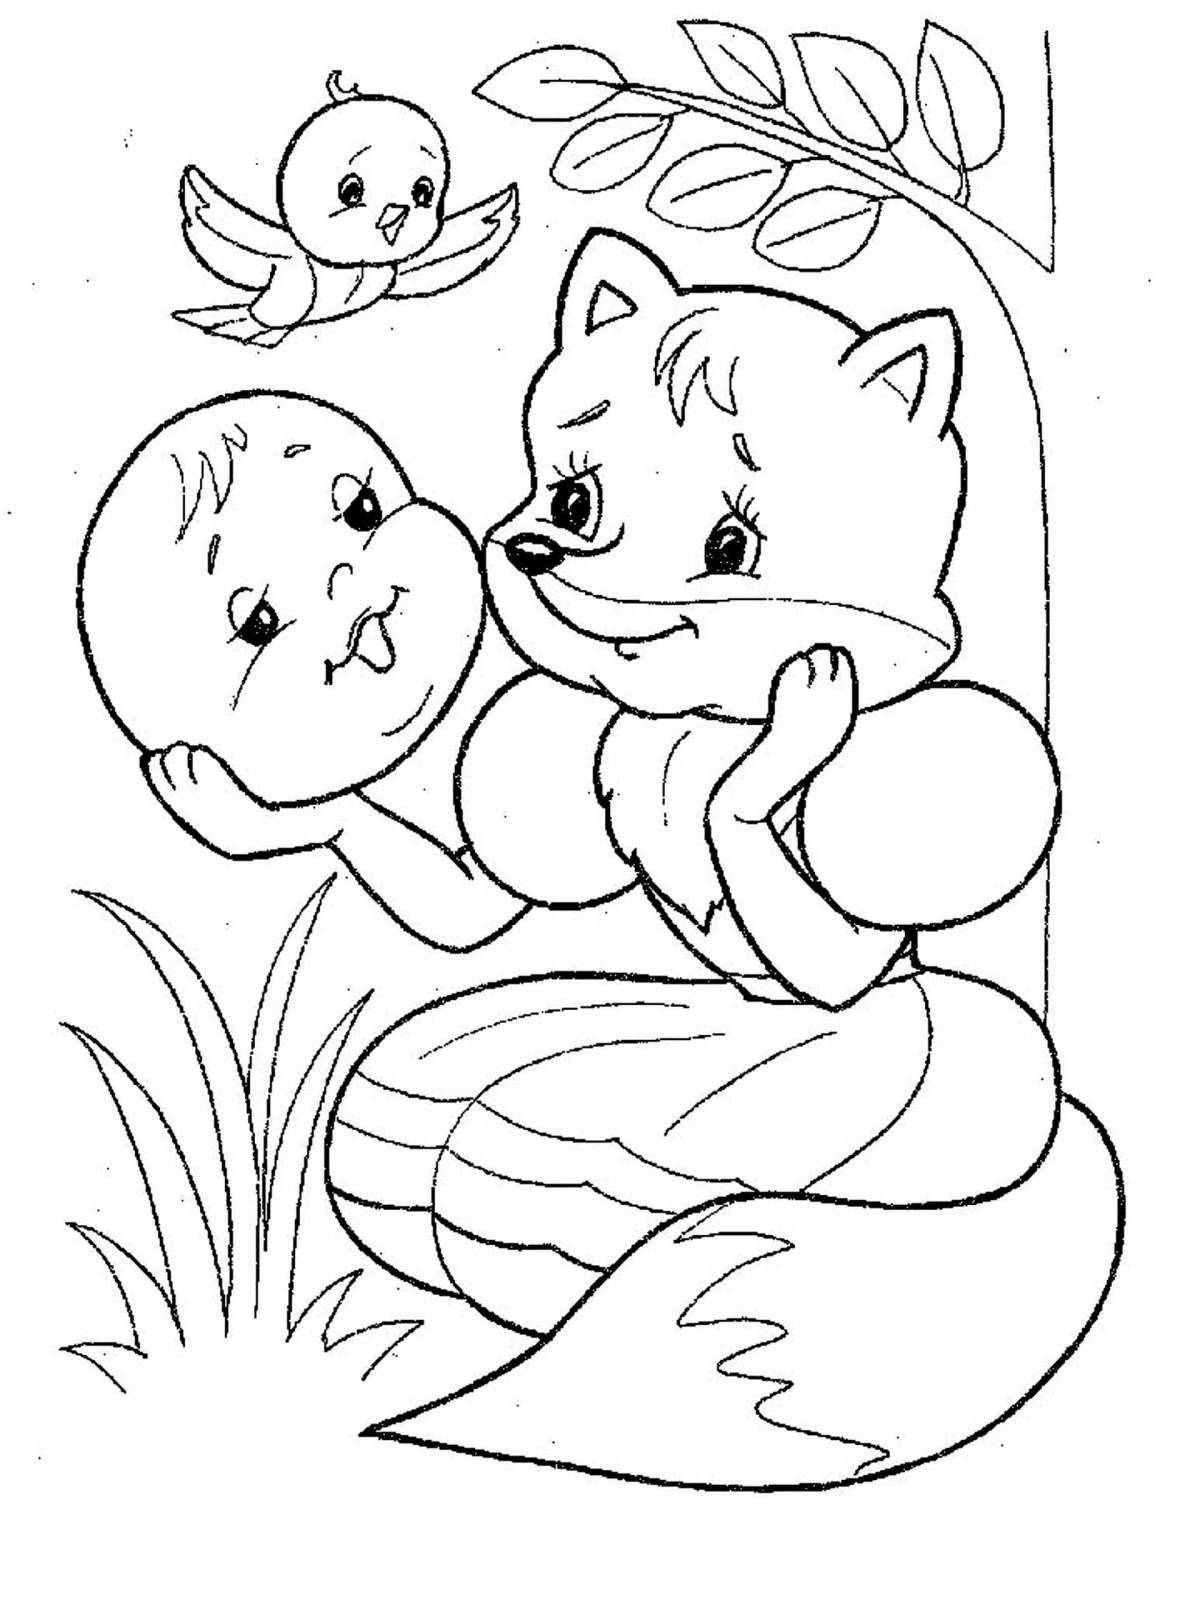 Cute fairy tale coloring book for preschoolers